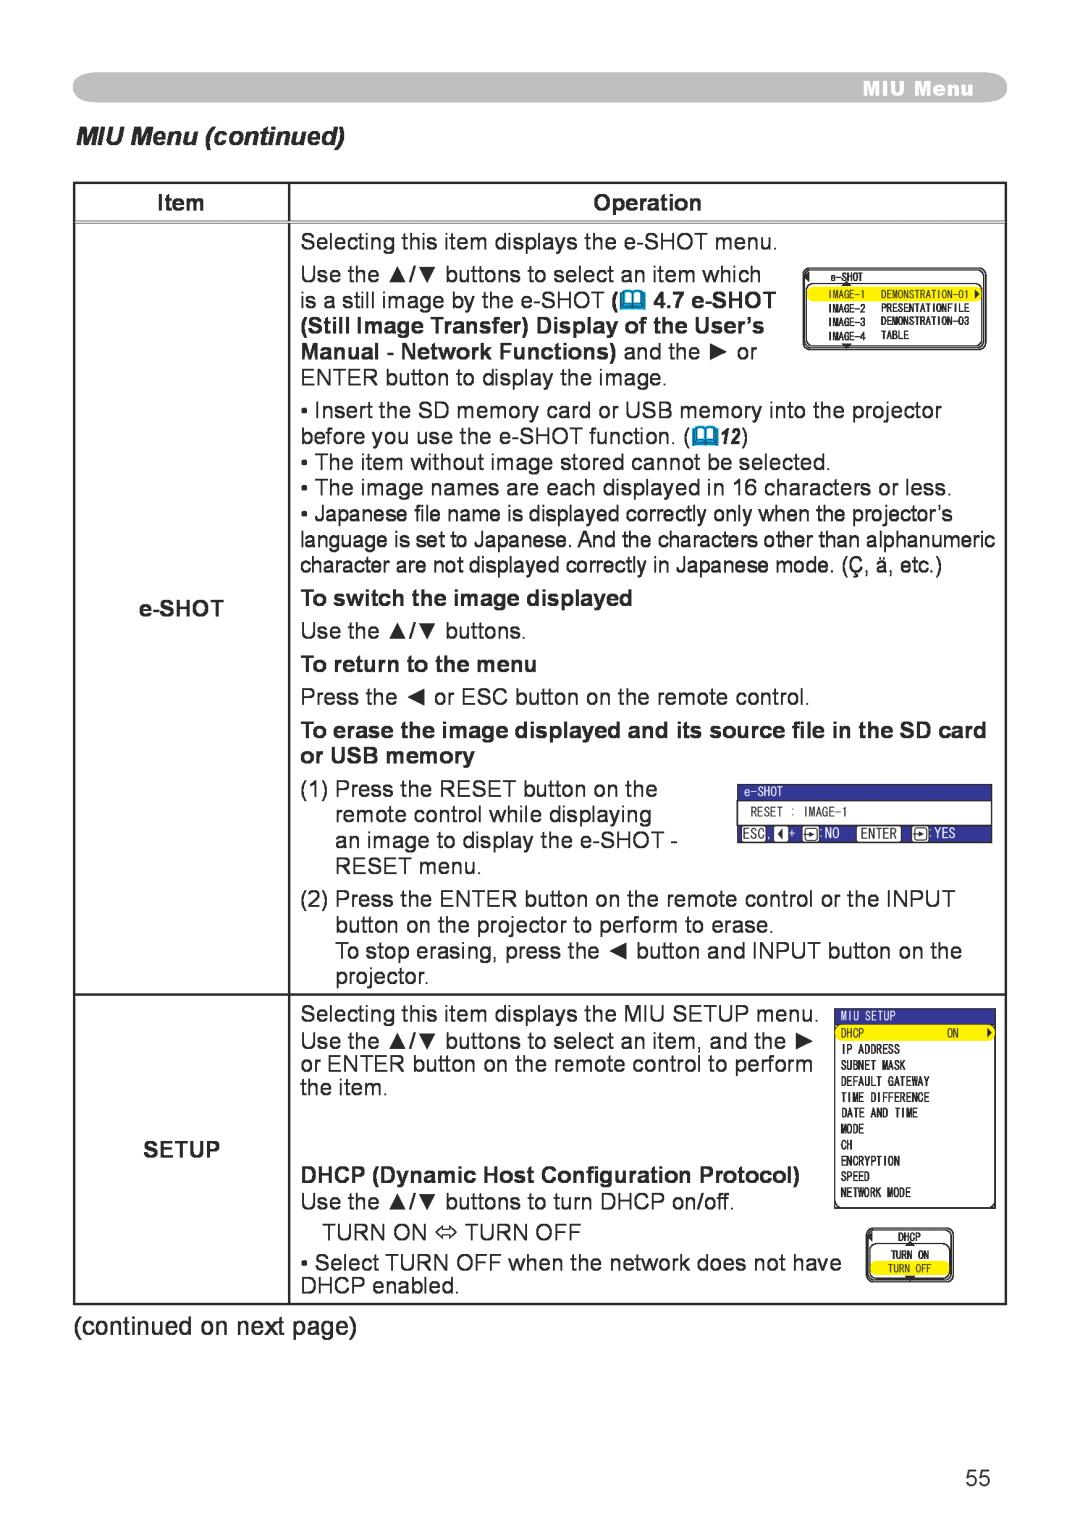 Hitachi CP-X608 MIU Menu continued, Operation, Still Image Transfer Display of the User’s, e-SHOT, To return to the menu 